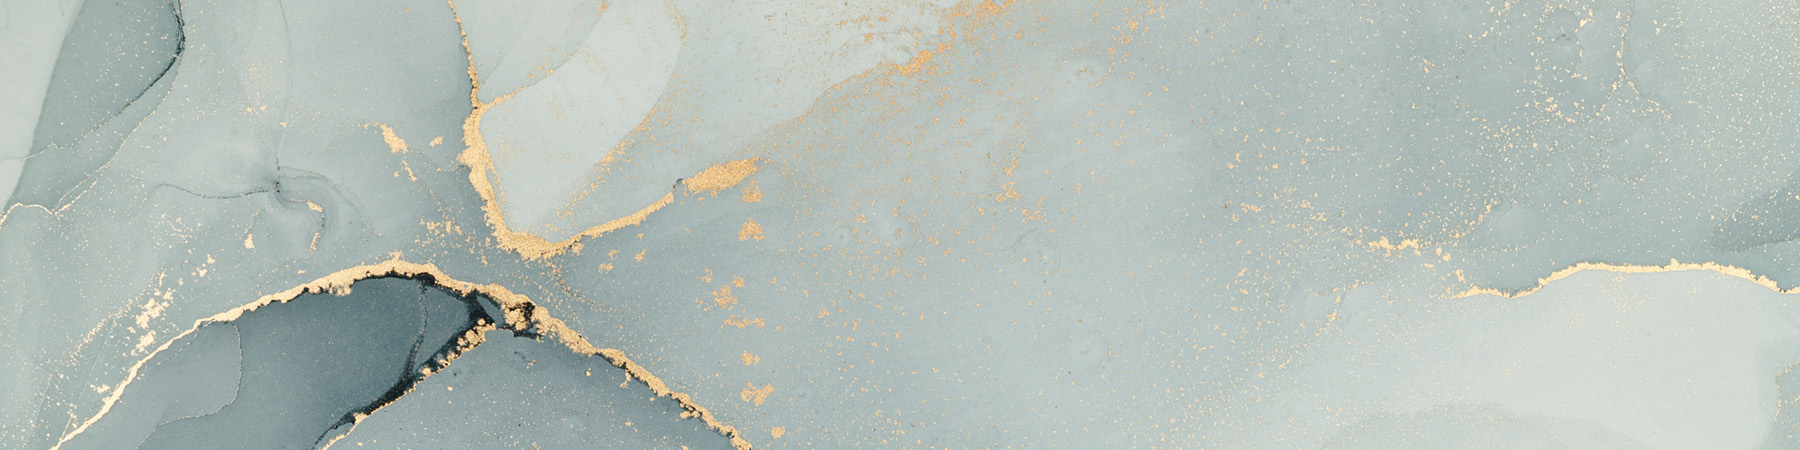 PlateART Küchenrückwand blau gold Alkohol Farben